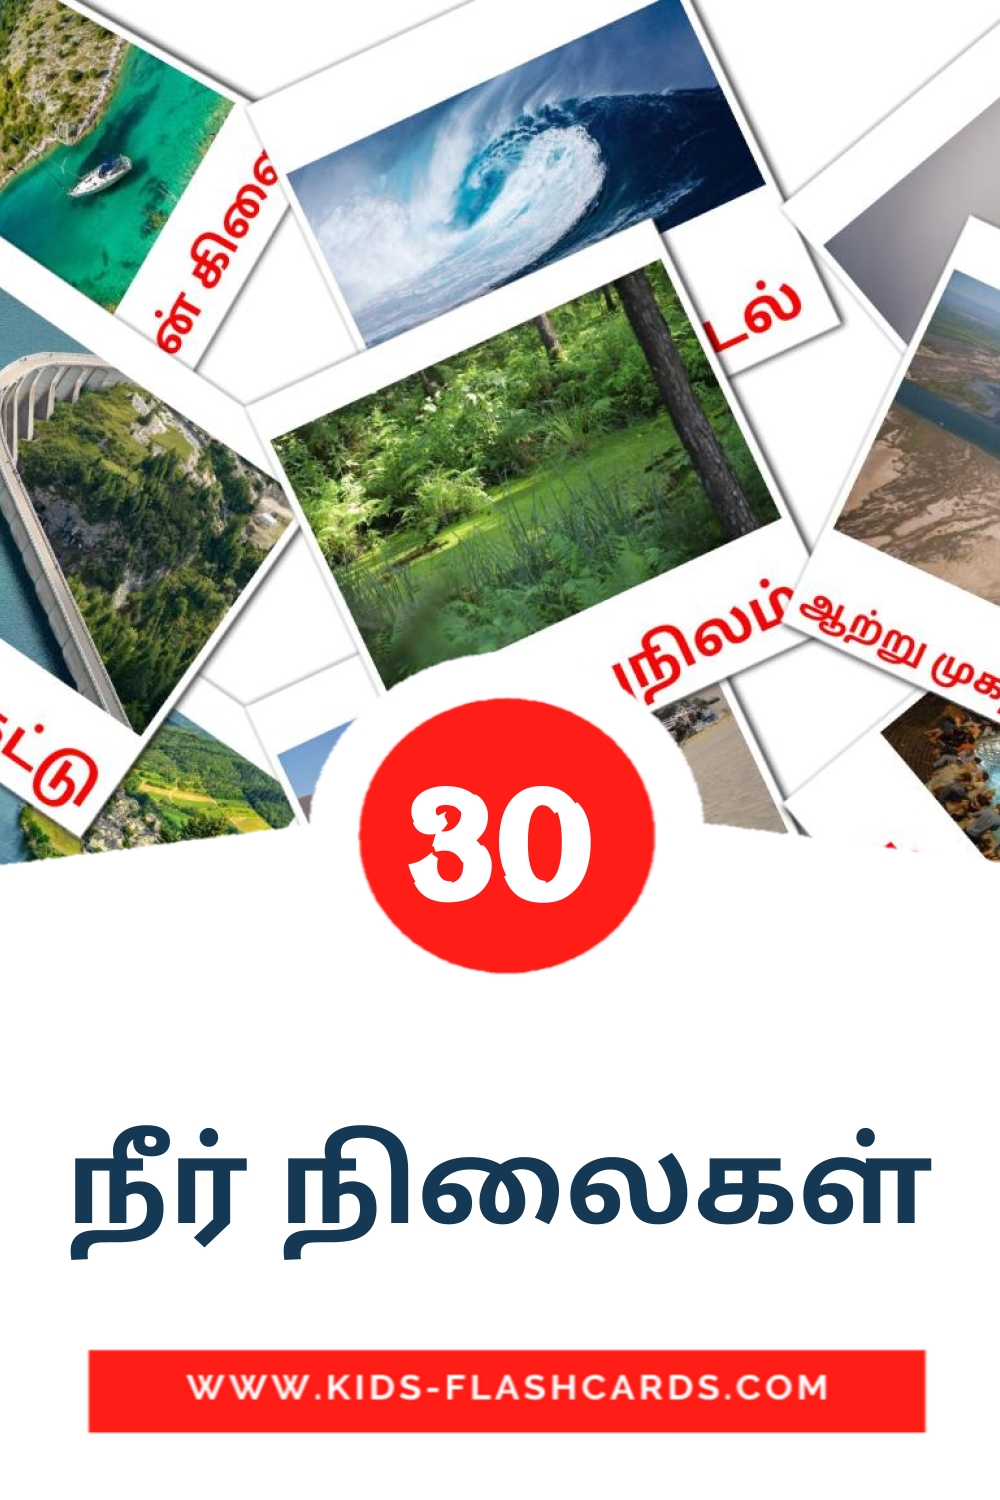 30 நீர் நிலைகள் fotokaarten voor kleuters in het tamil